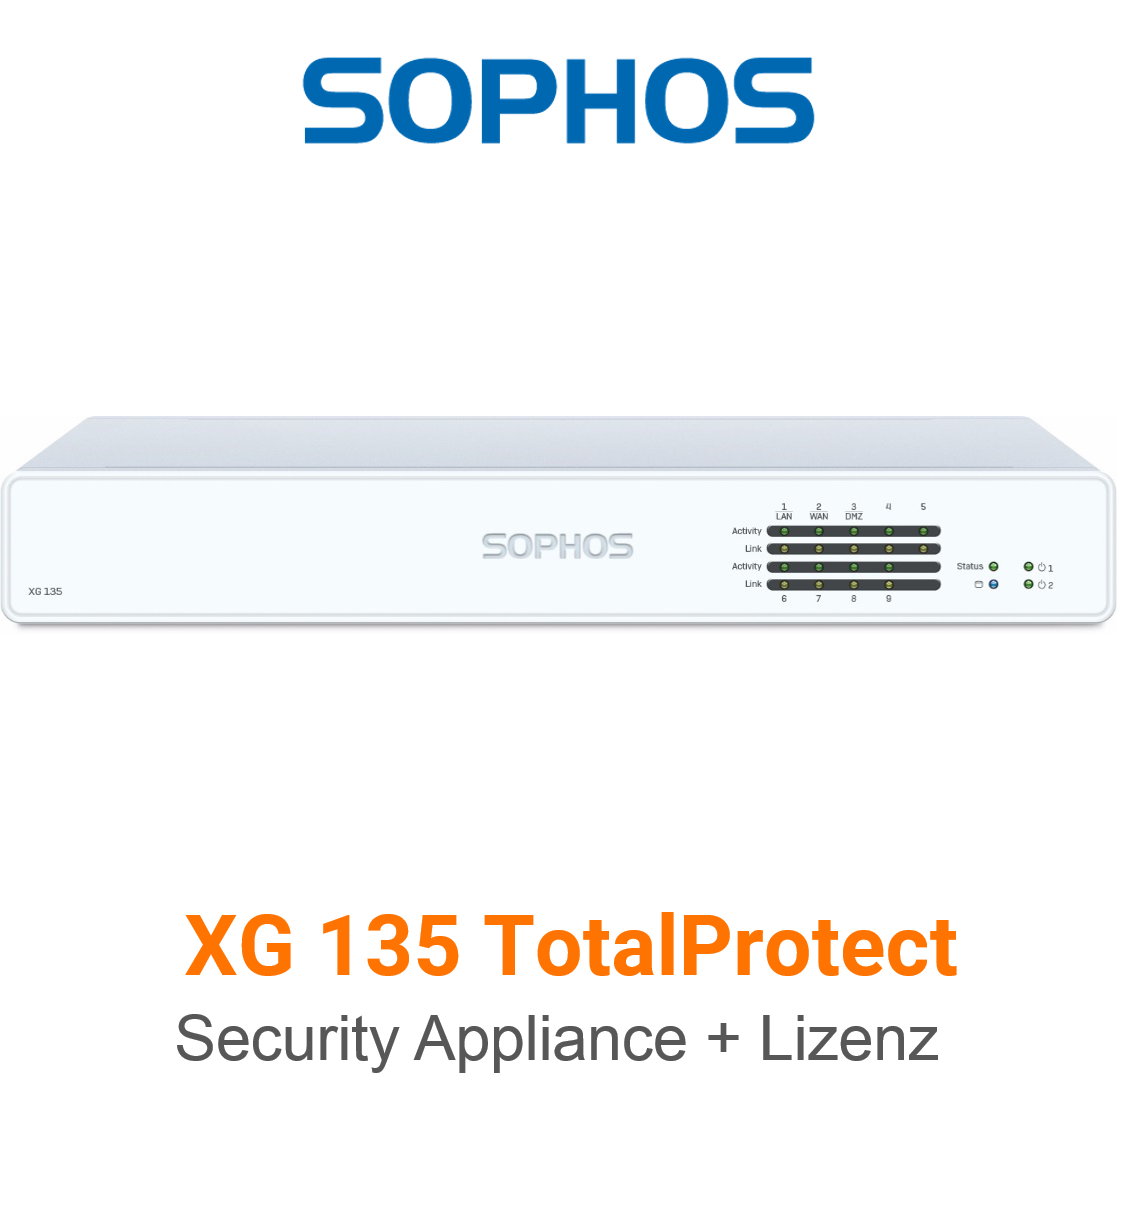 Sophos XG 135 TotalProtect Bundle (Hardware + Lizenz)